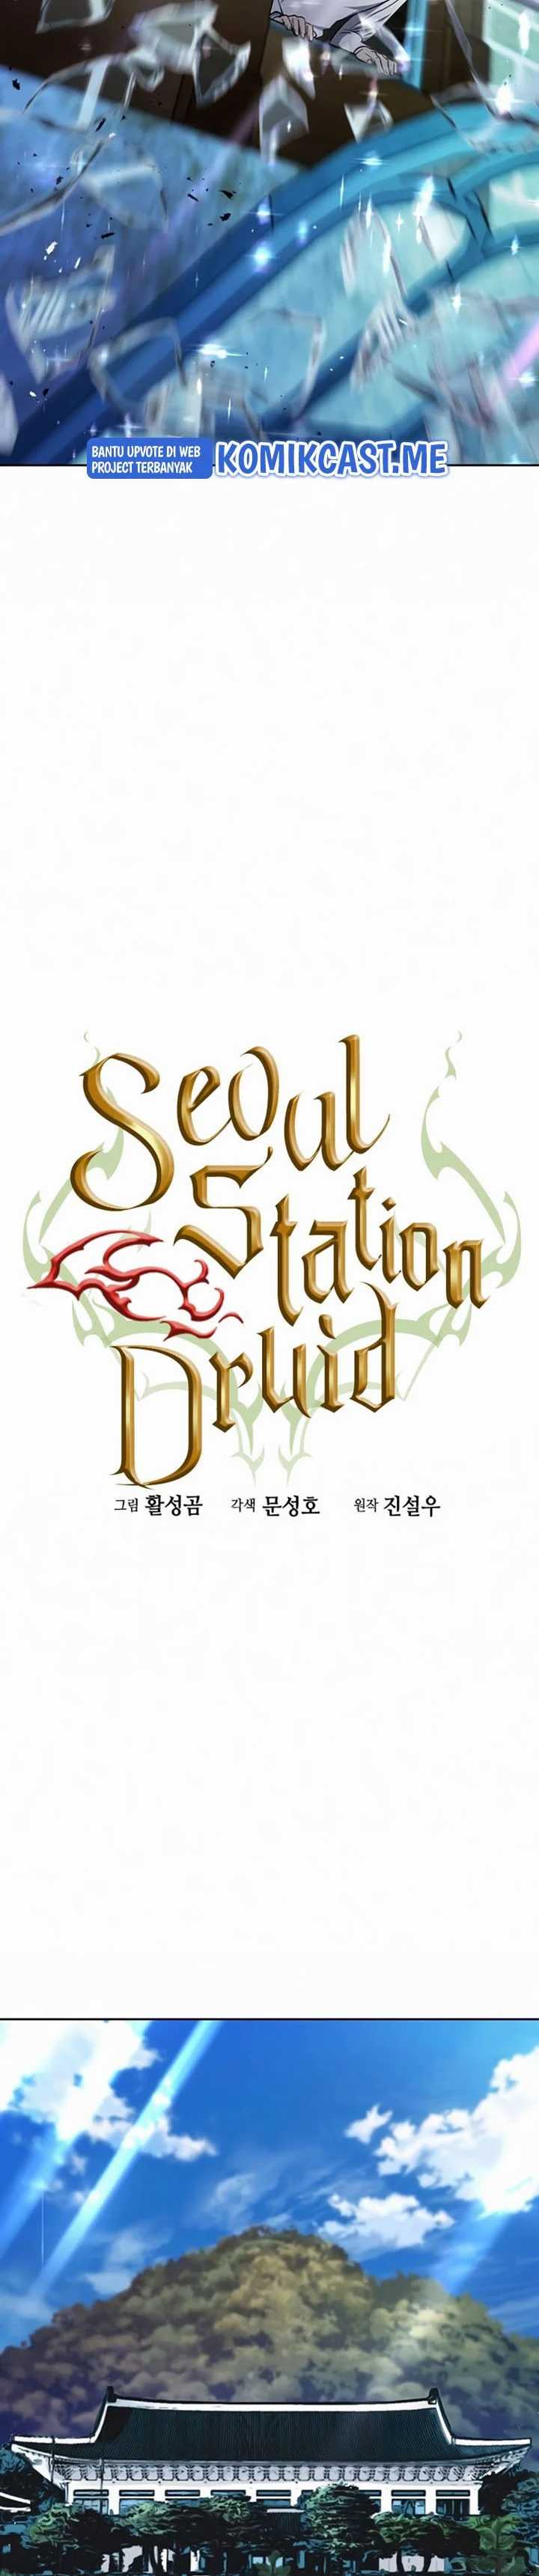 Seoul Station Druid Chapter 69